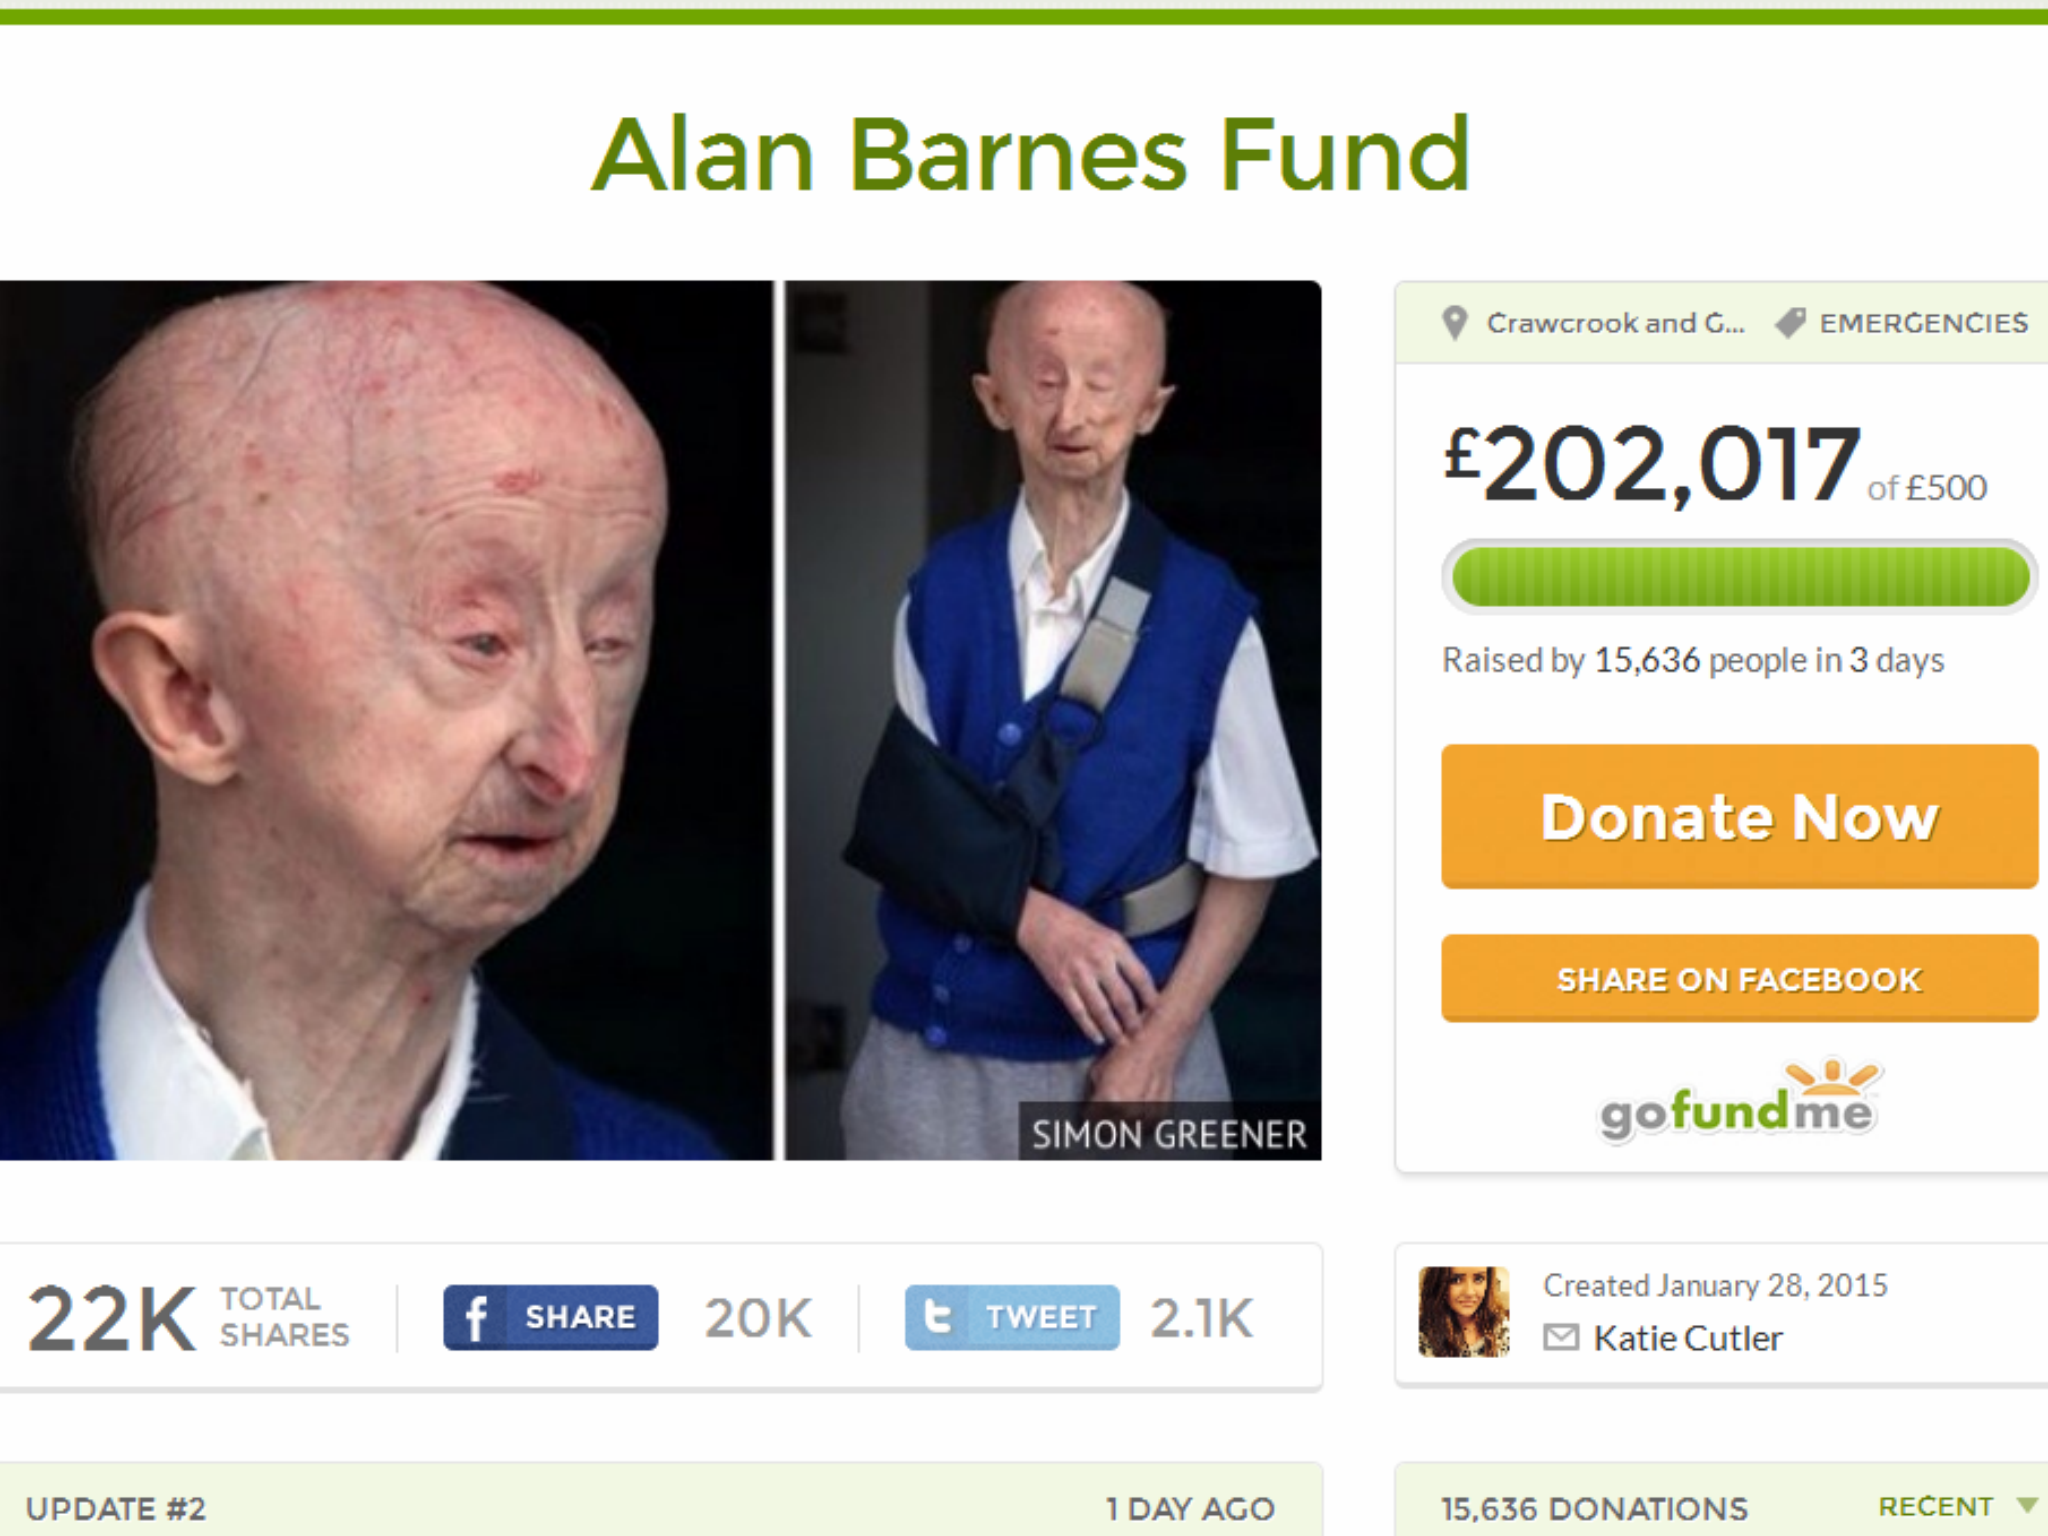 The Alan Barnes GoFundMe page has raised over £200,000